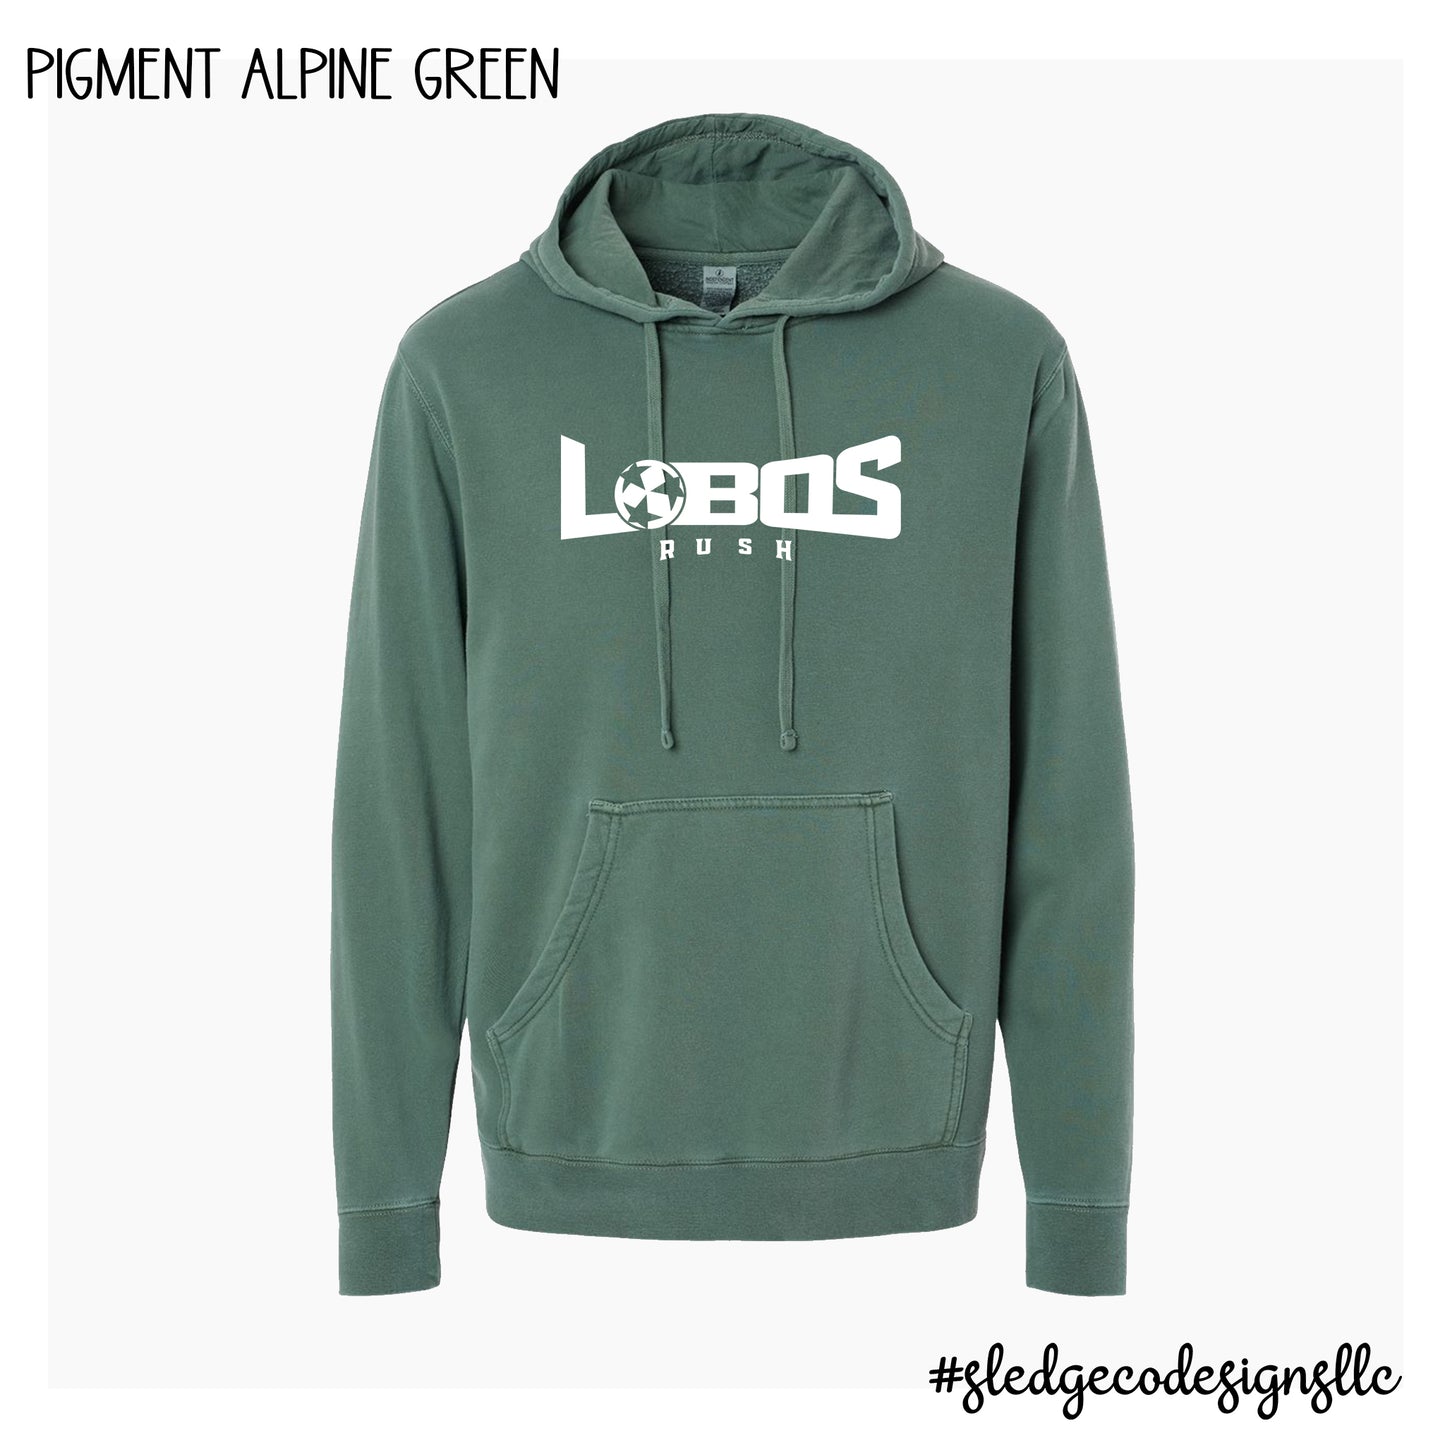 LOBOS SOCCER | Midweight Pigment-Dyed Hooded Sweatshirt | Pigment Alpine Green